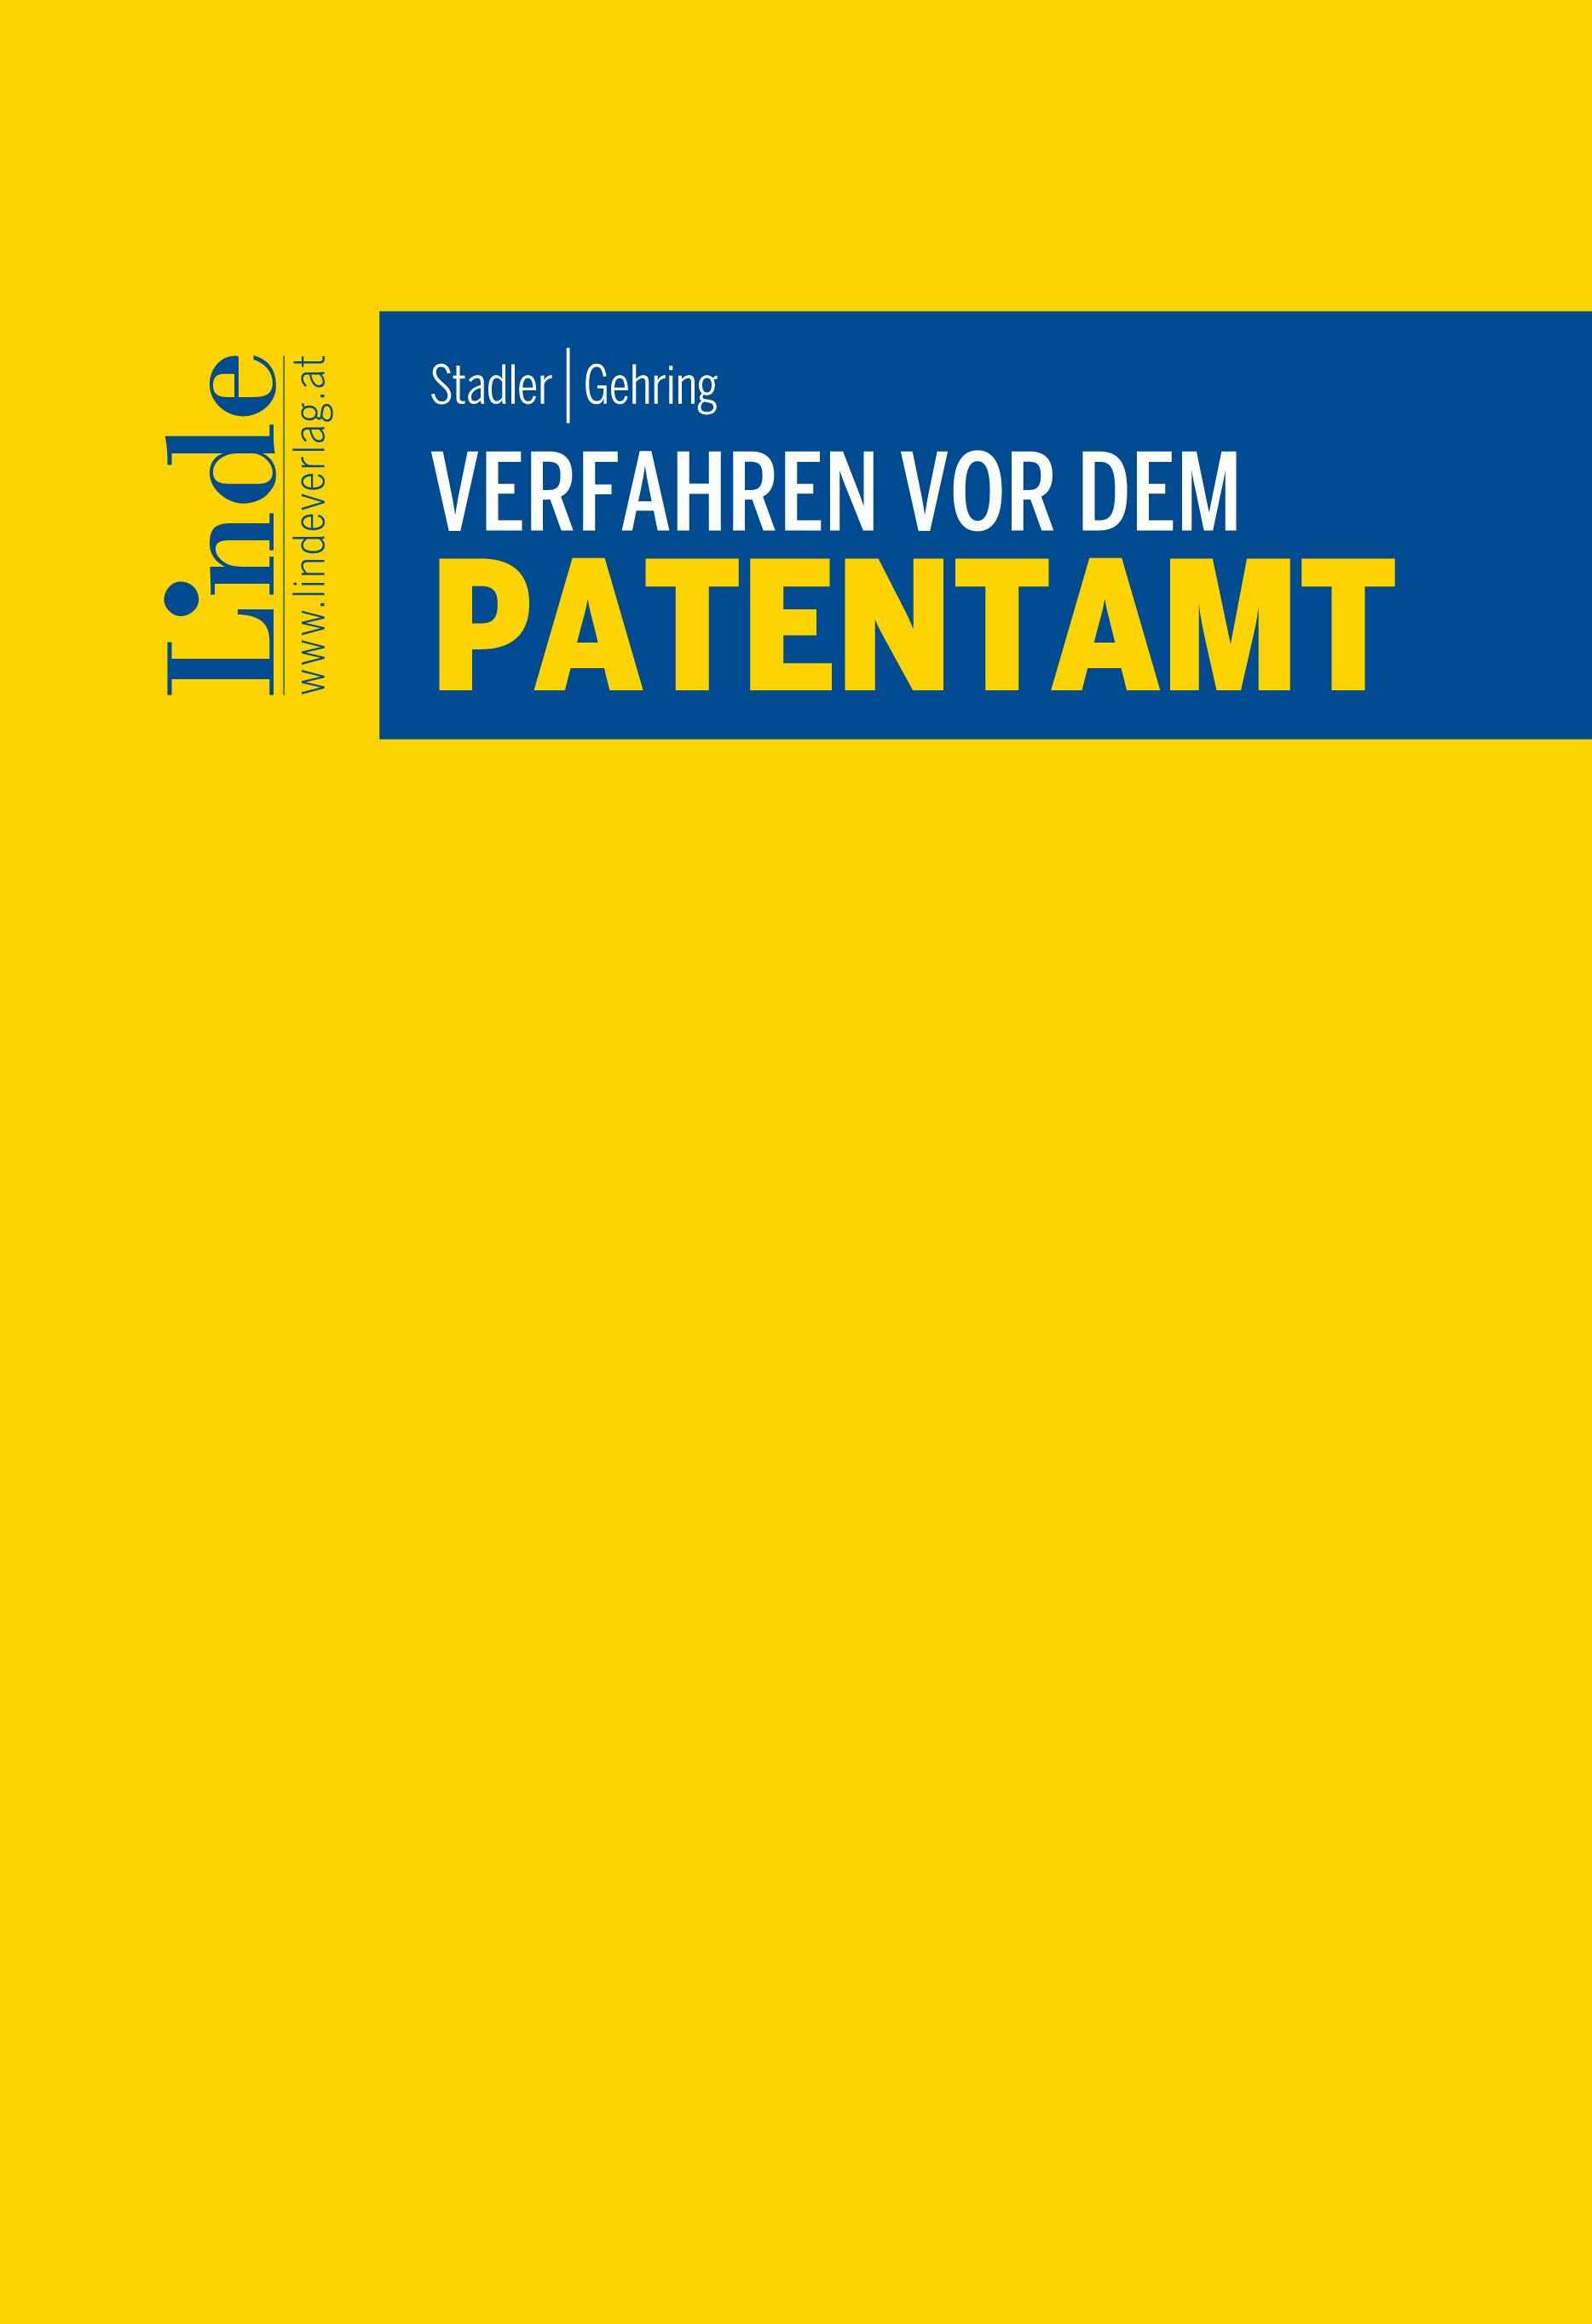 Stadler | Gehring
Verfahren vor dem Patentamt